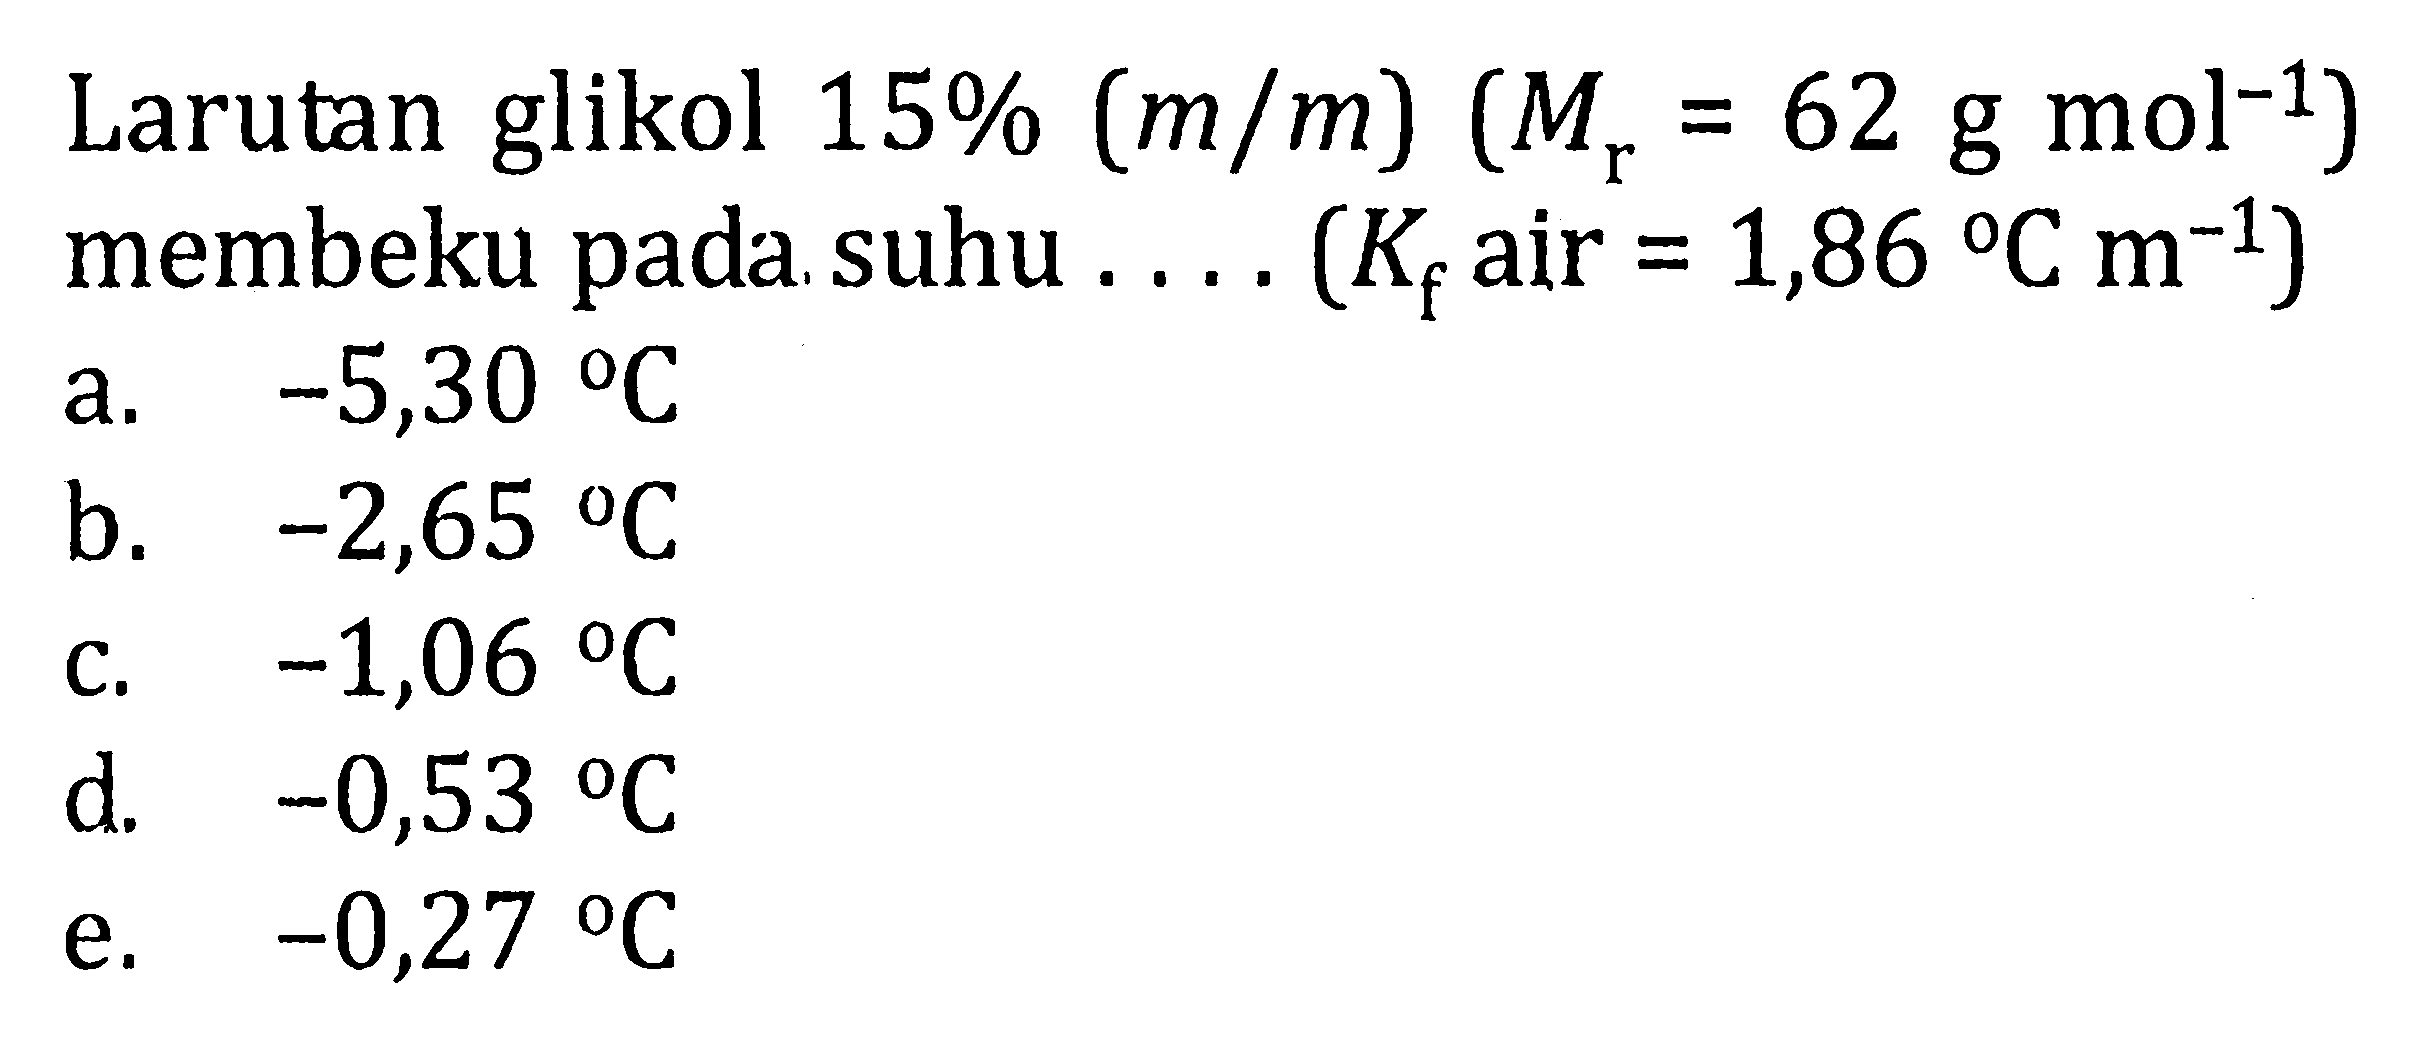 Larutan glikol 15% (m/m) (Mr = 62 g mol^-1) membeku pada suhu ..... (Kf air = 1,86 C m^-1)